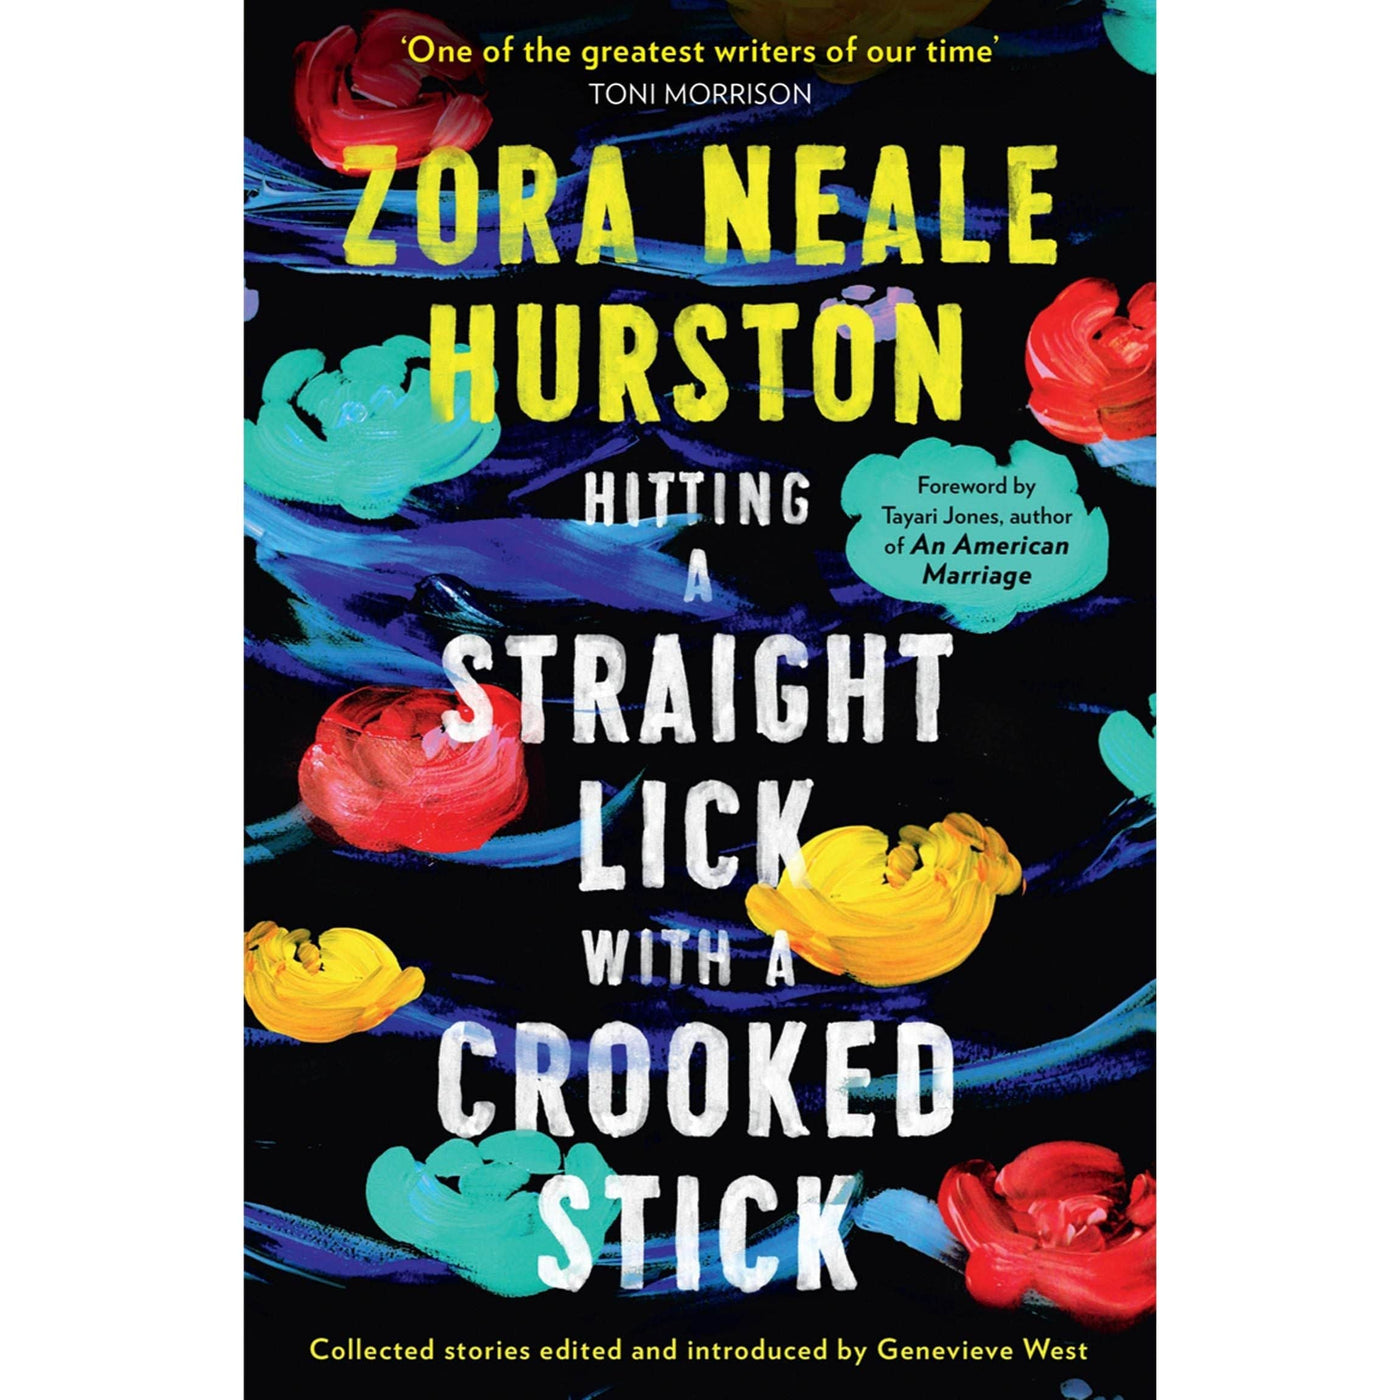 Zora Neale Hurston: Hitting a Straight Lick with a Crooked Stick